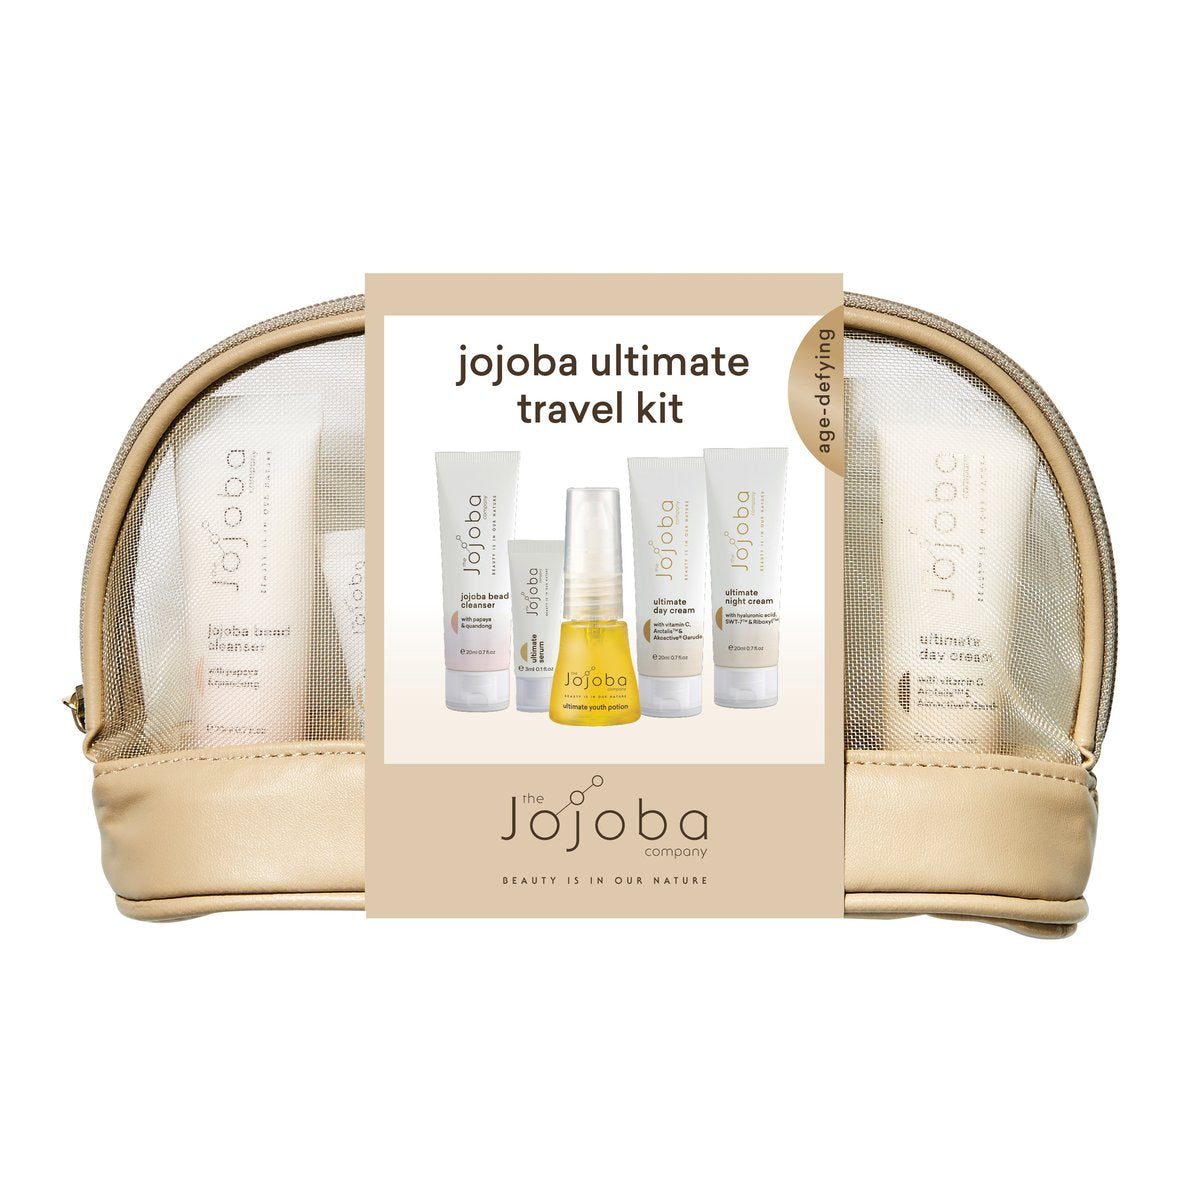 The Jojoba Company Jojoba Ultimate Travel Kit